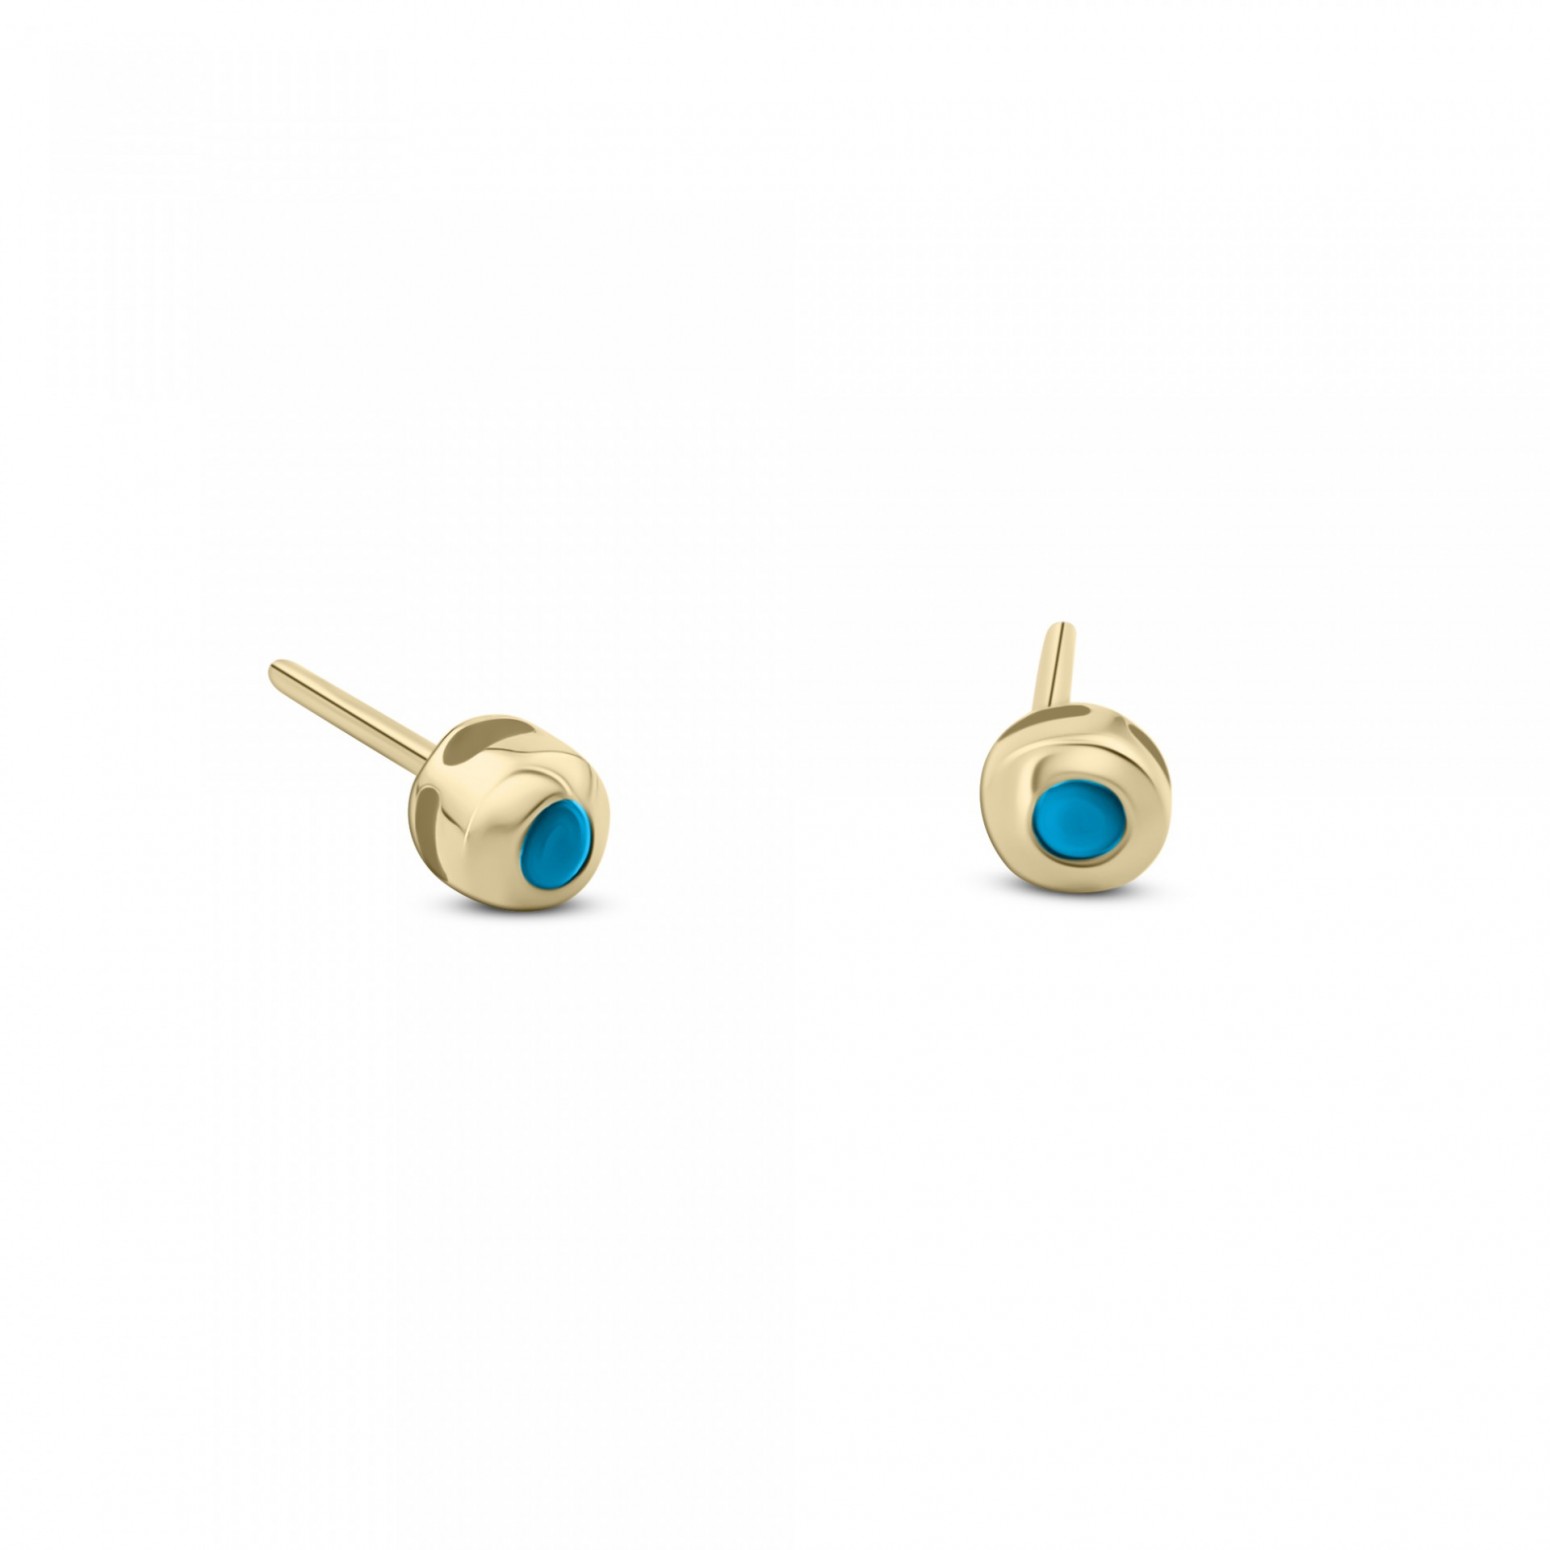 Earrings K9 gold with turquoise, sk4154 EARRINGS Κοσμηματα - chrilia.gr